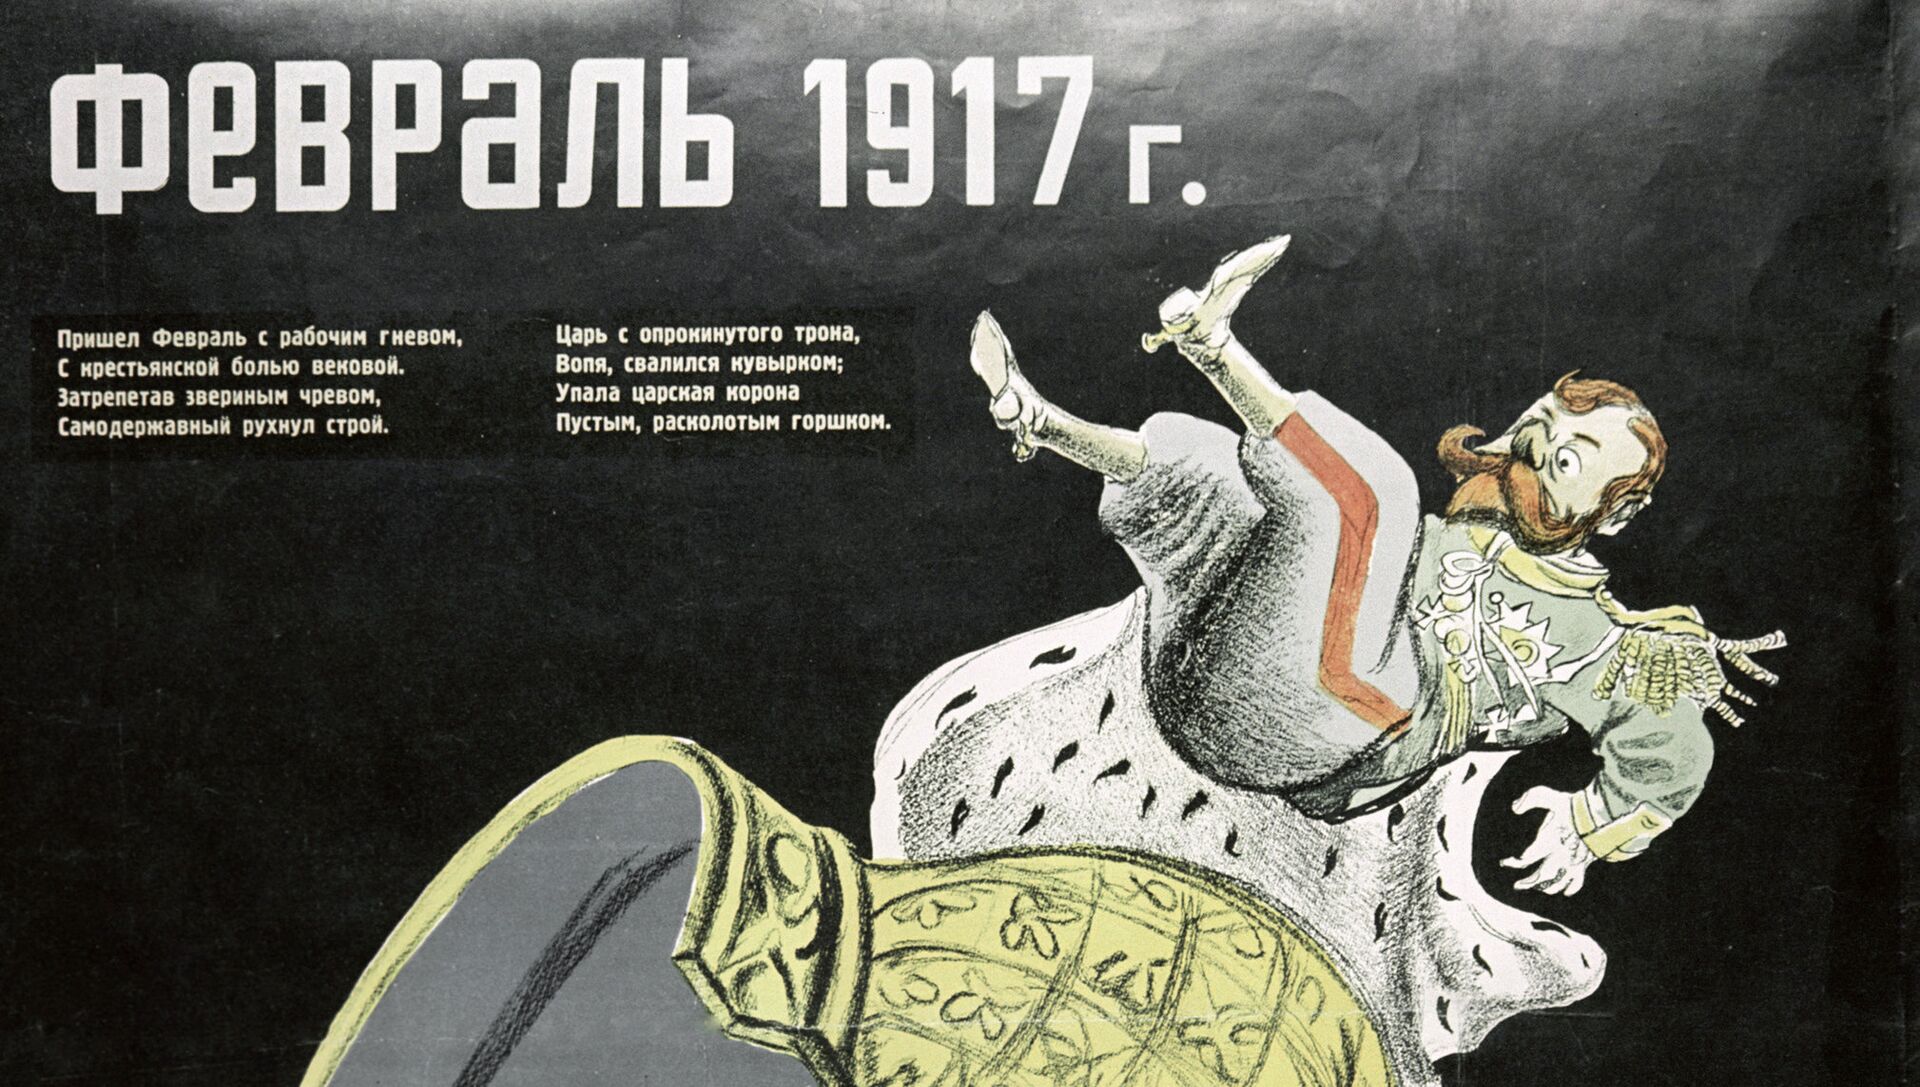 Против царя песня. Революционные плакаты 1917. Плакаты революции 1917 года. Революция 1917 плакаты. Февральская революция плакаты.